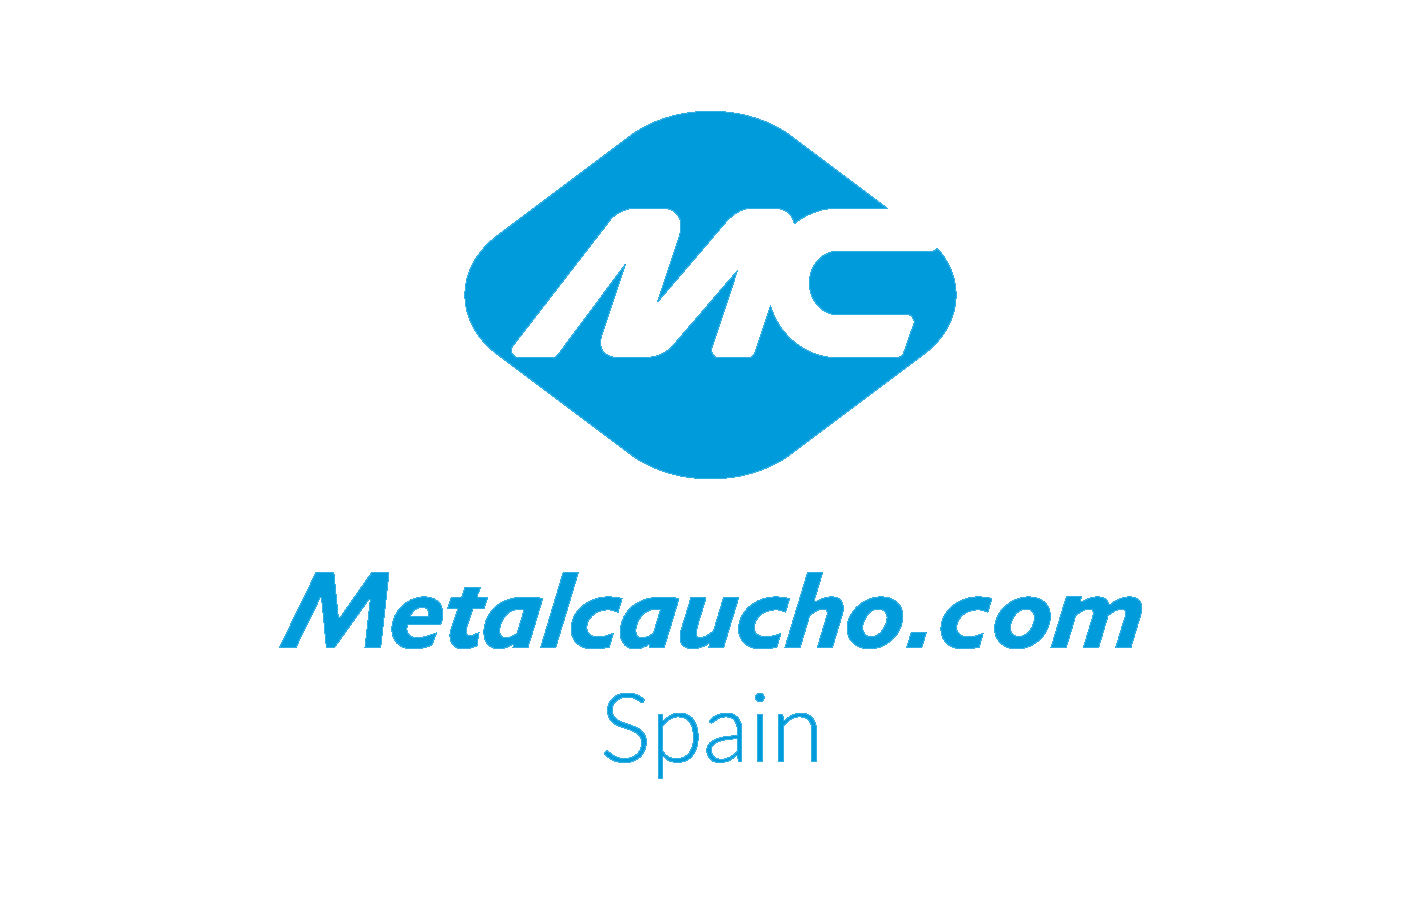 Metalcaucho.com